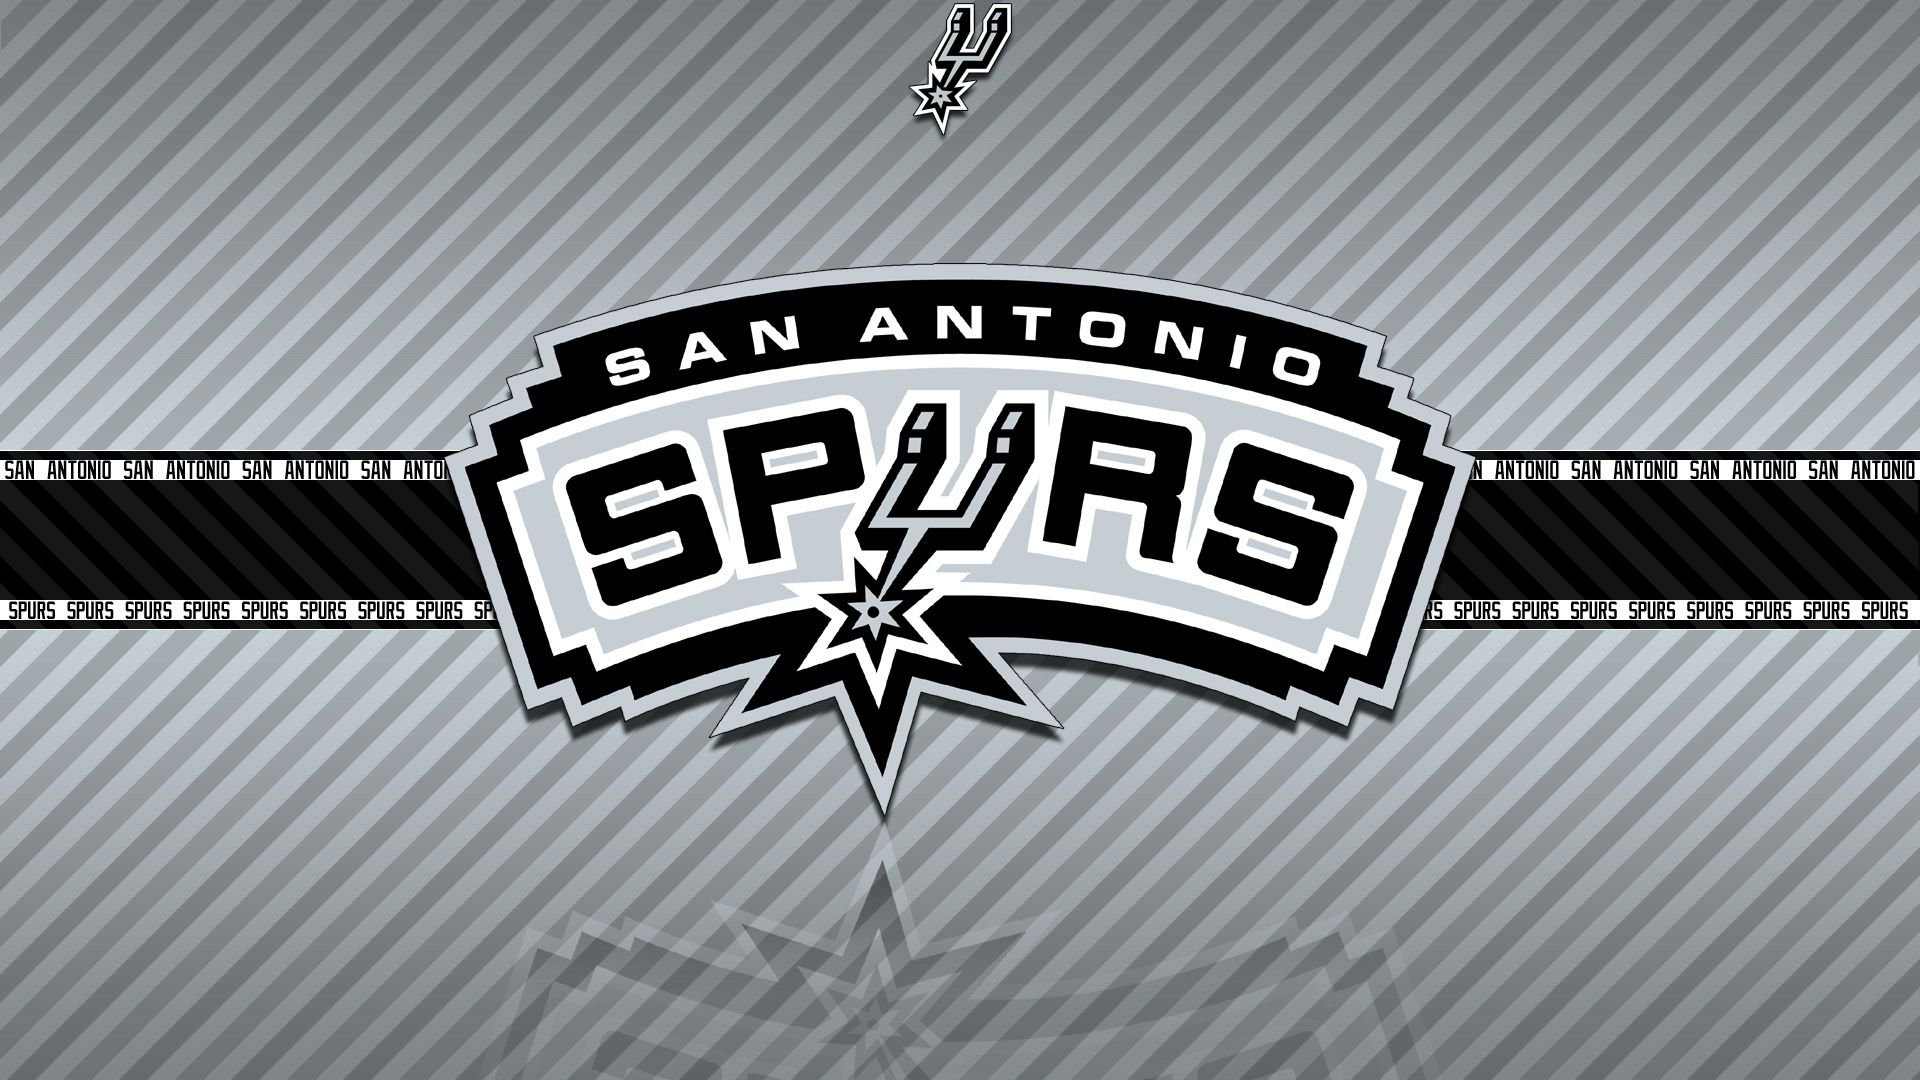 San Antonio Spurs wallpaper photo hd